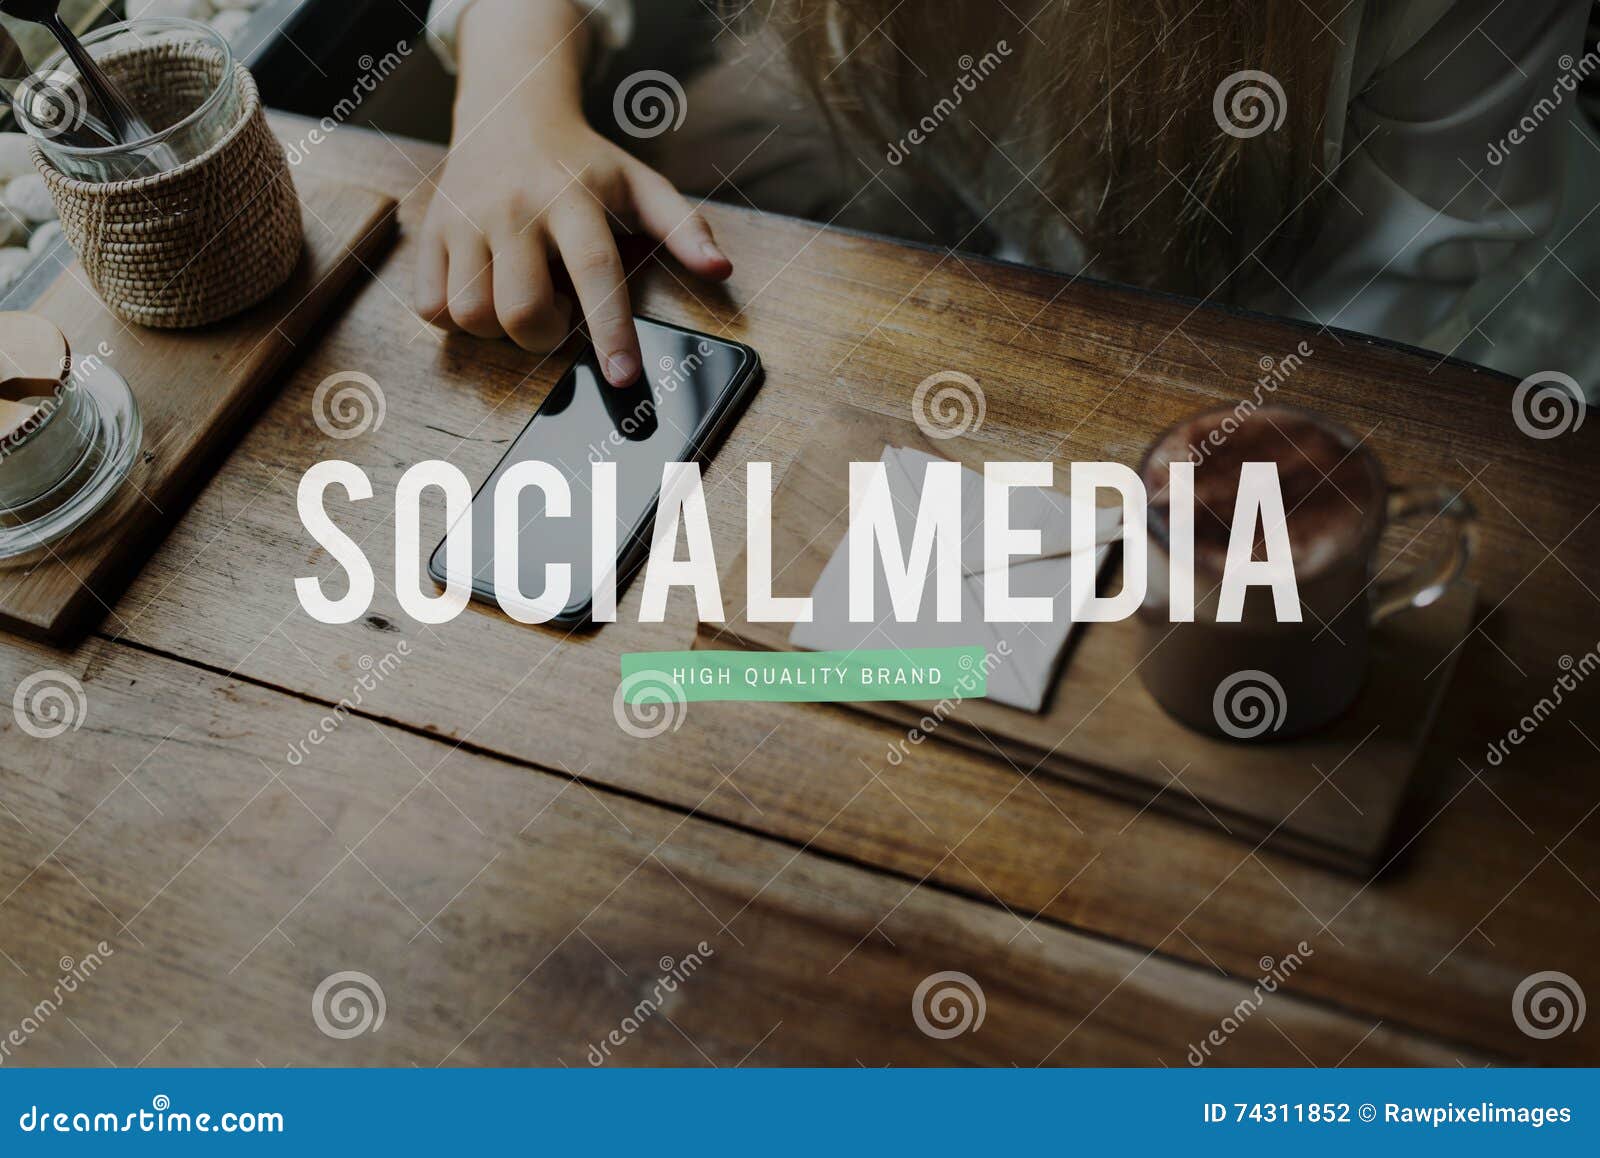 social media socialize technology blog concept